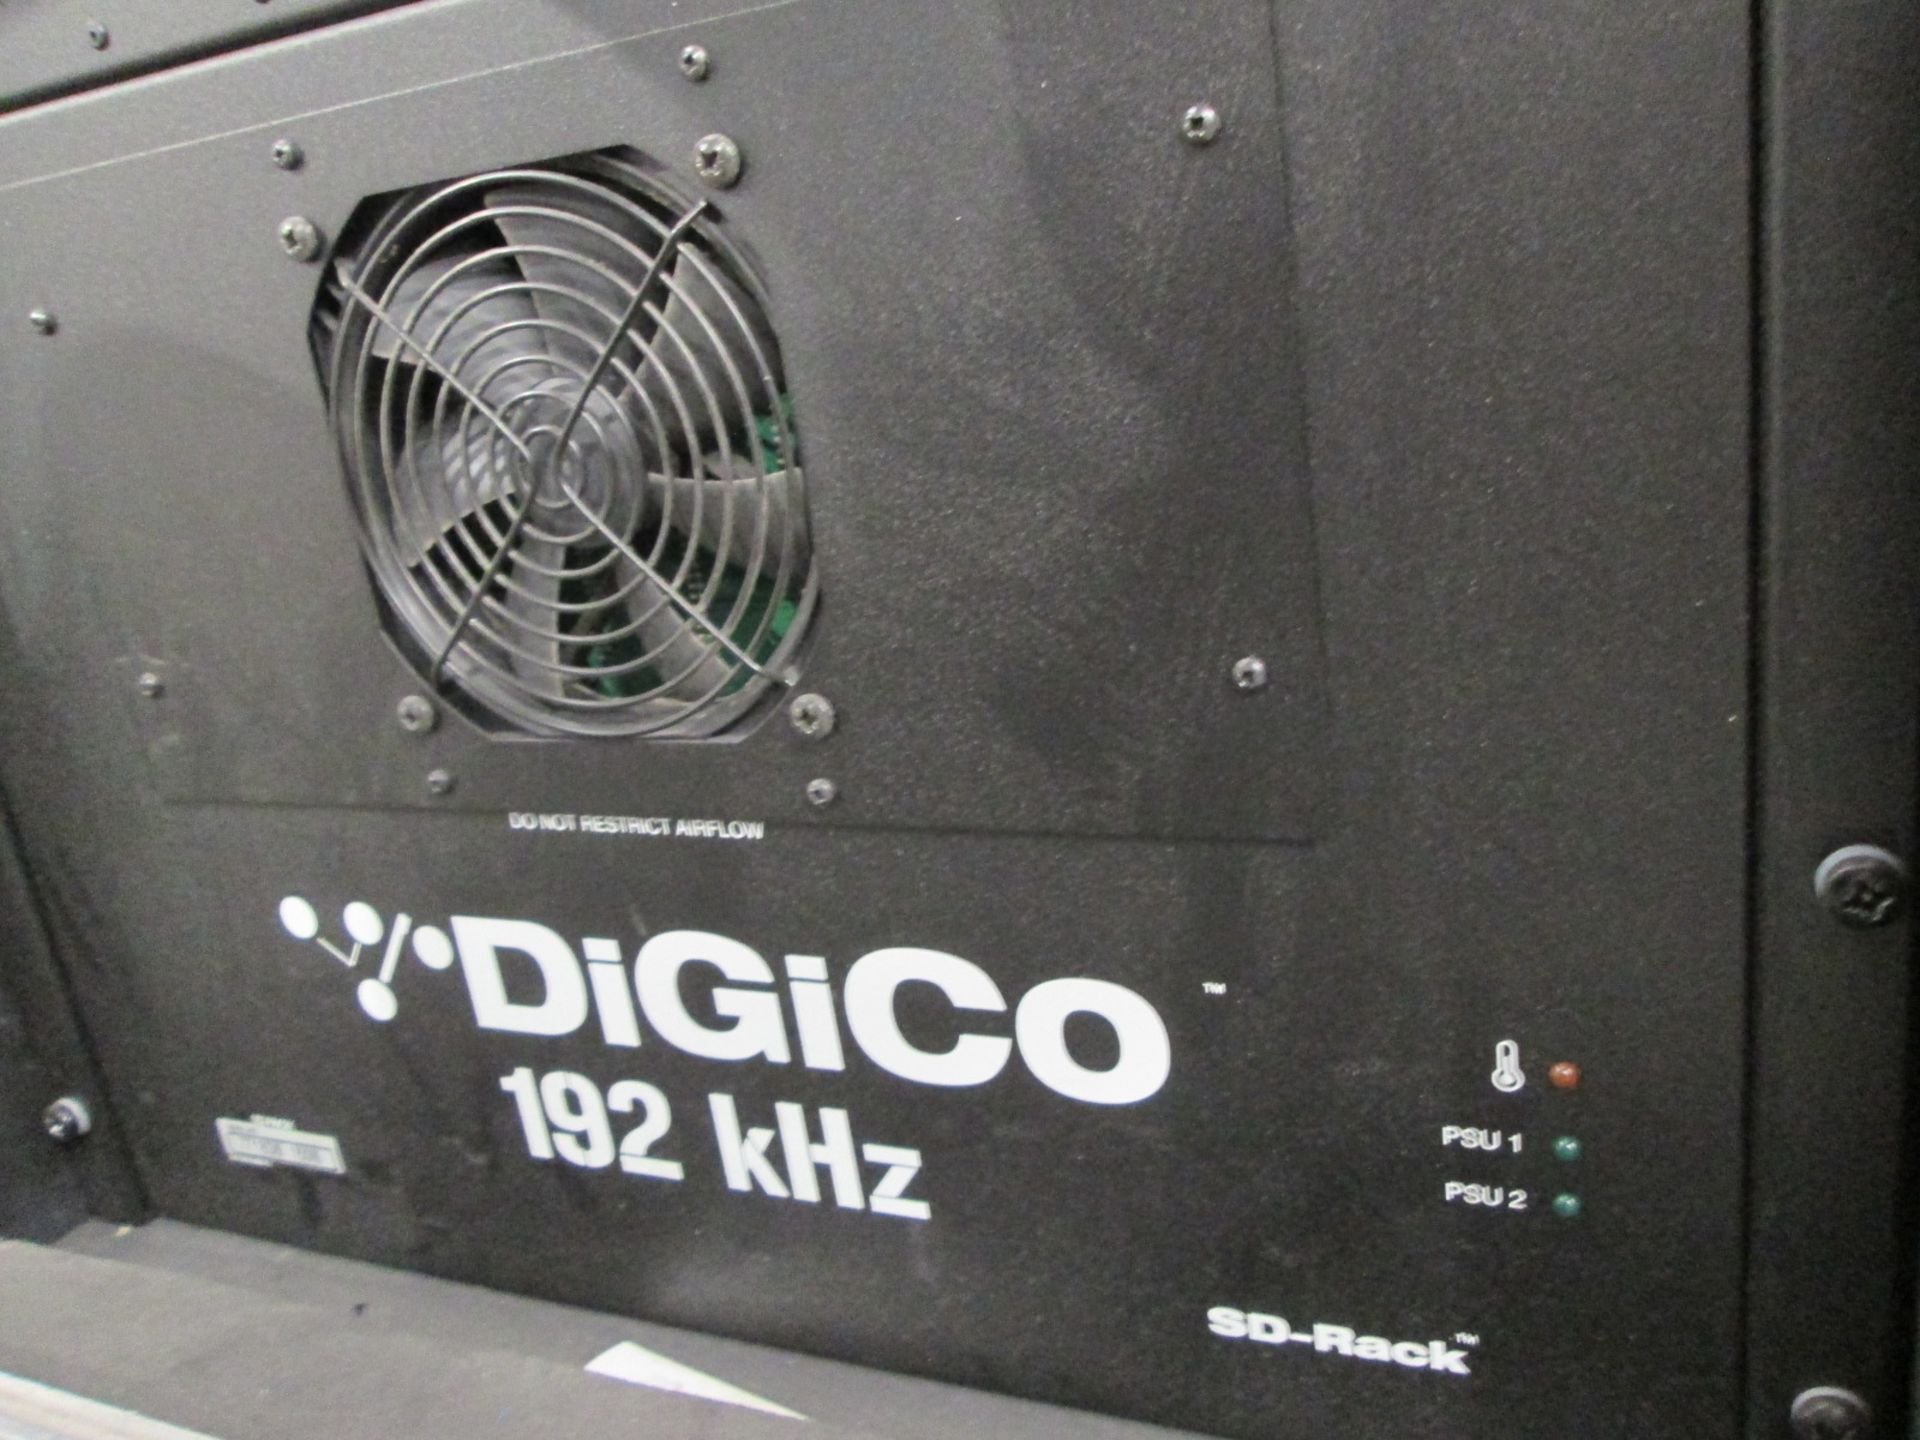 DigiCo 192 kHz SD-Rack Digital Input / Output Frame. S/N 771836 1506 - Image 3 of 8